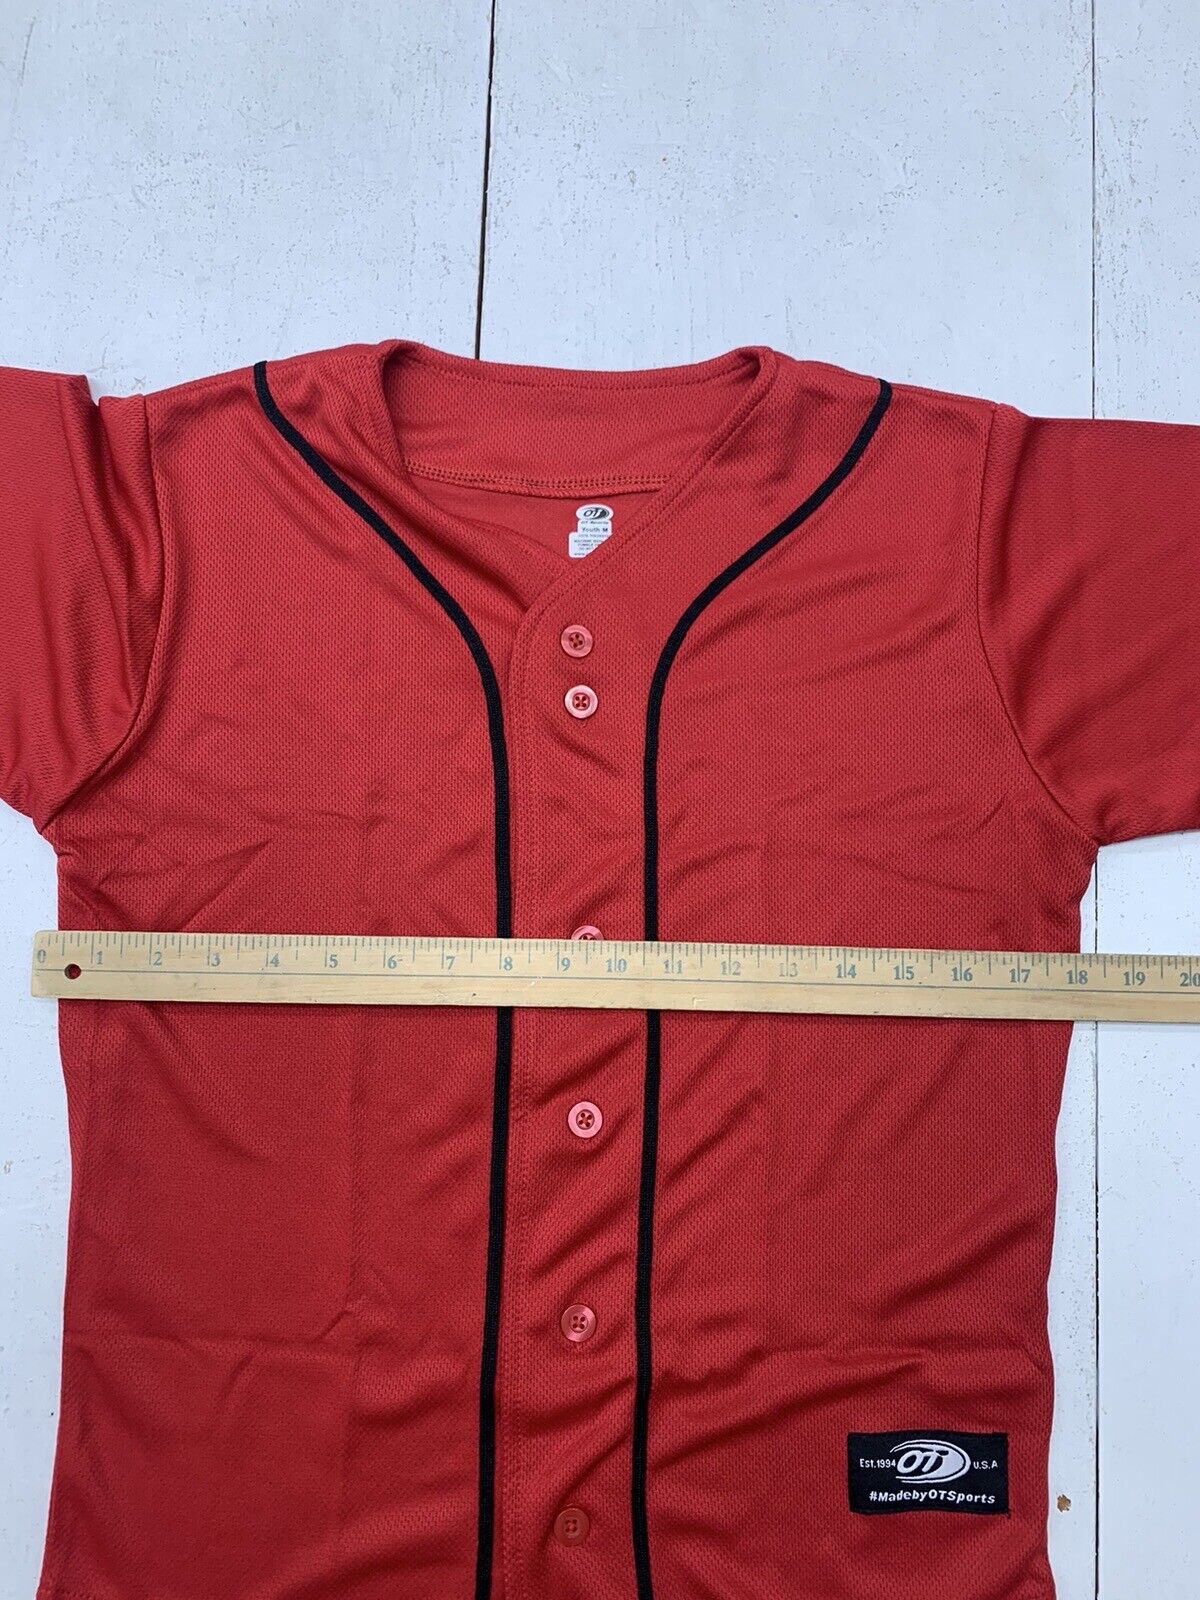 OT Sports Kids Red Button Up Baseball Jersey Size Medium - beyond exchange